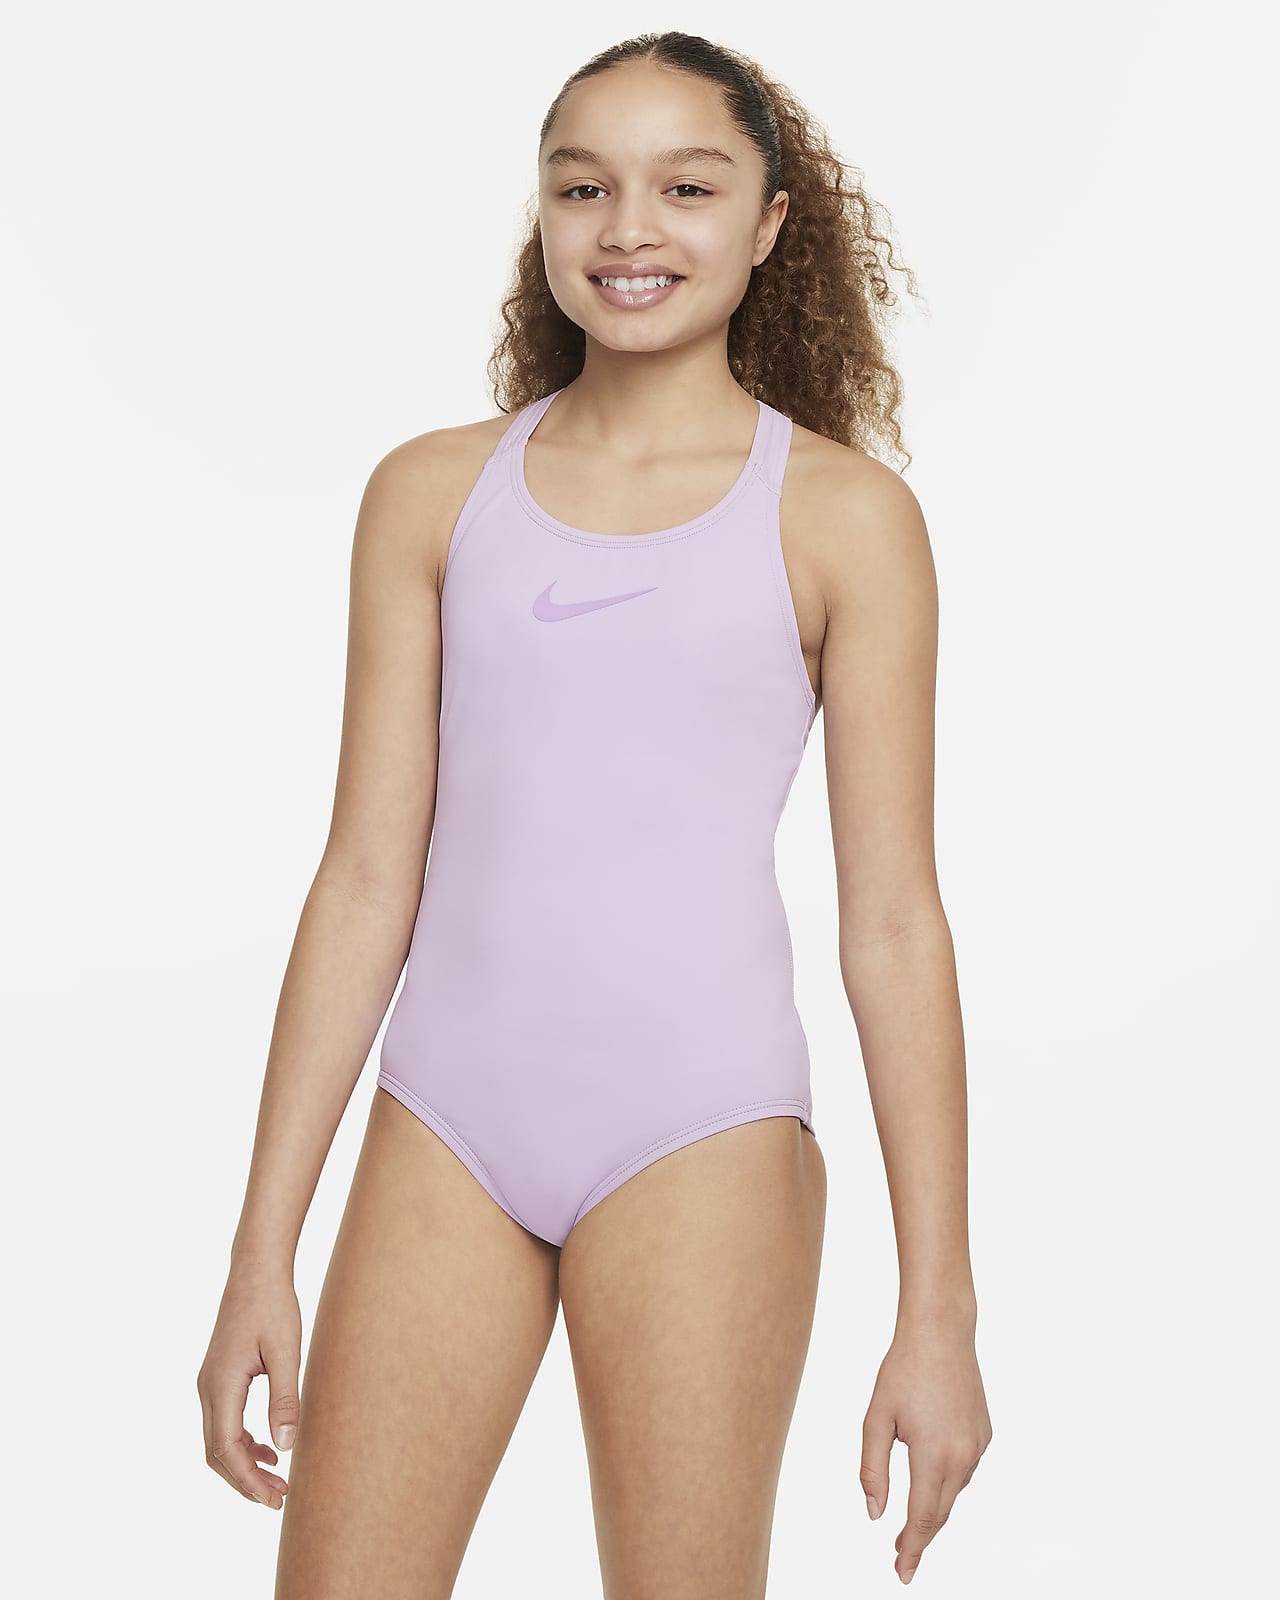 Nike Bikini Swimwear Sets for Girls Sizes (4+)